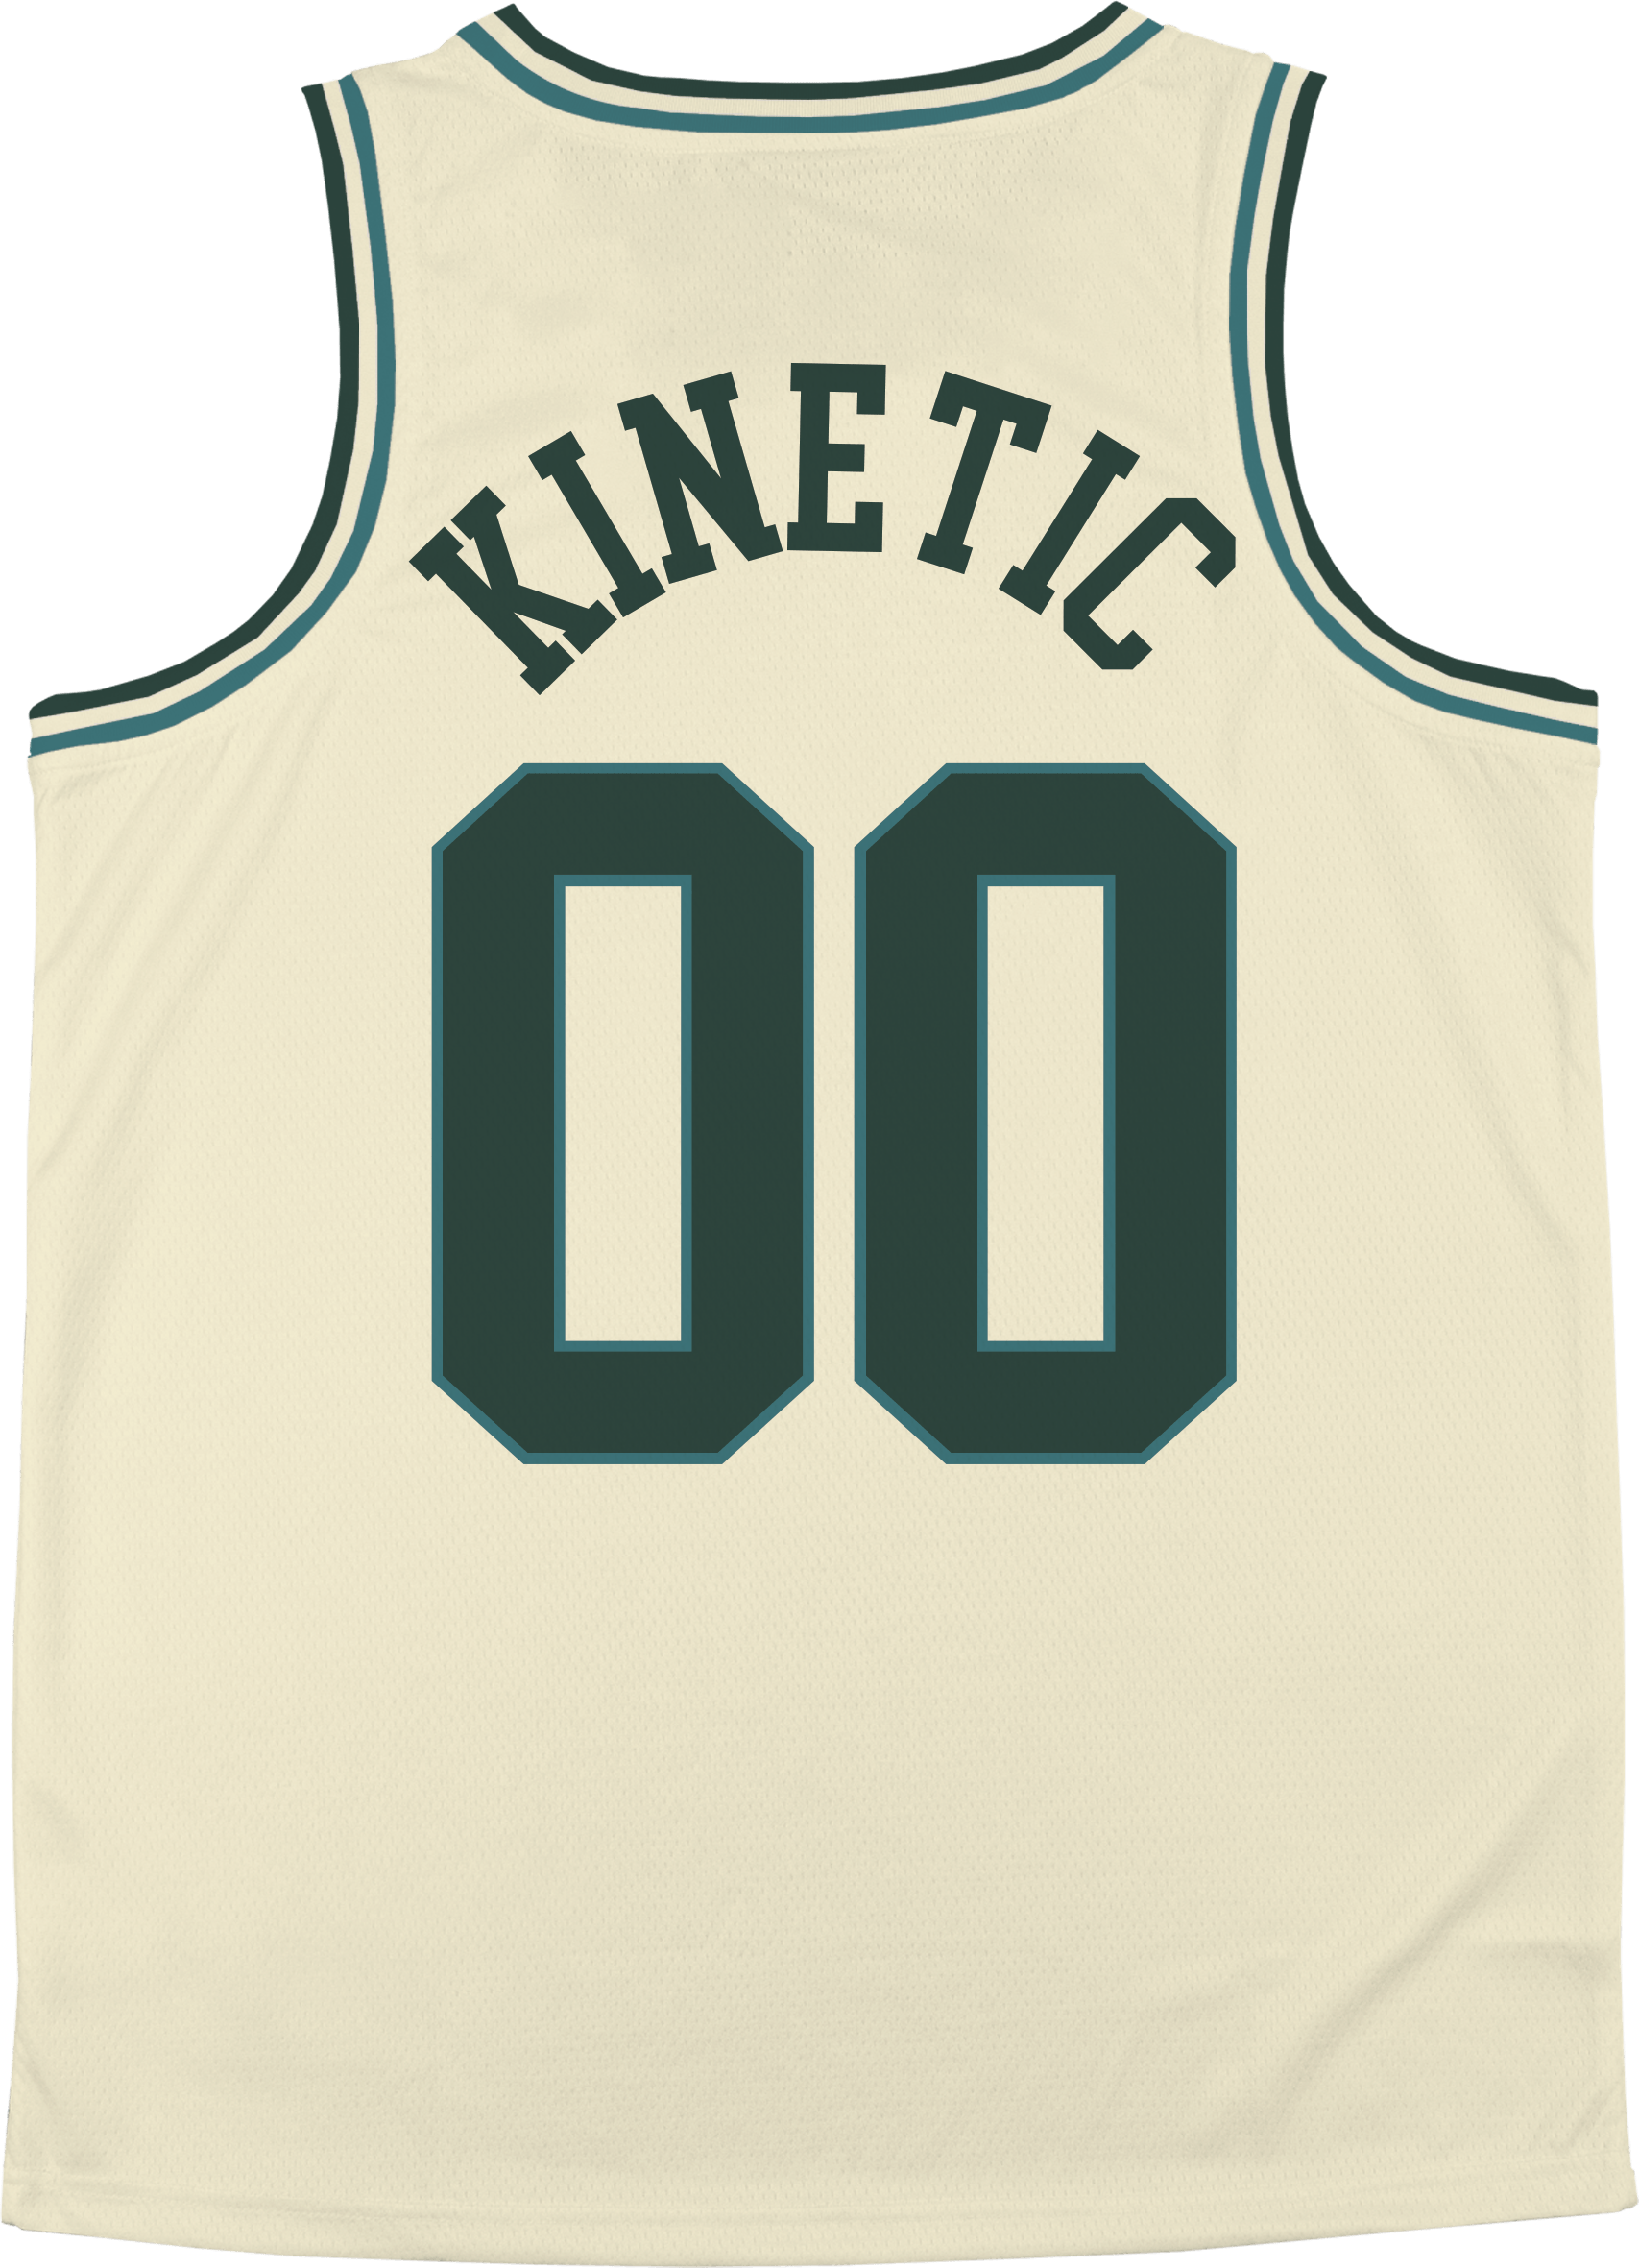 Kappa Sigma - Buttercream Basketball Jersey Premium Basketball Kinetic Society LLC 